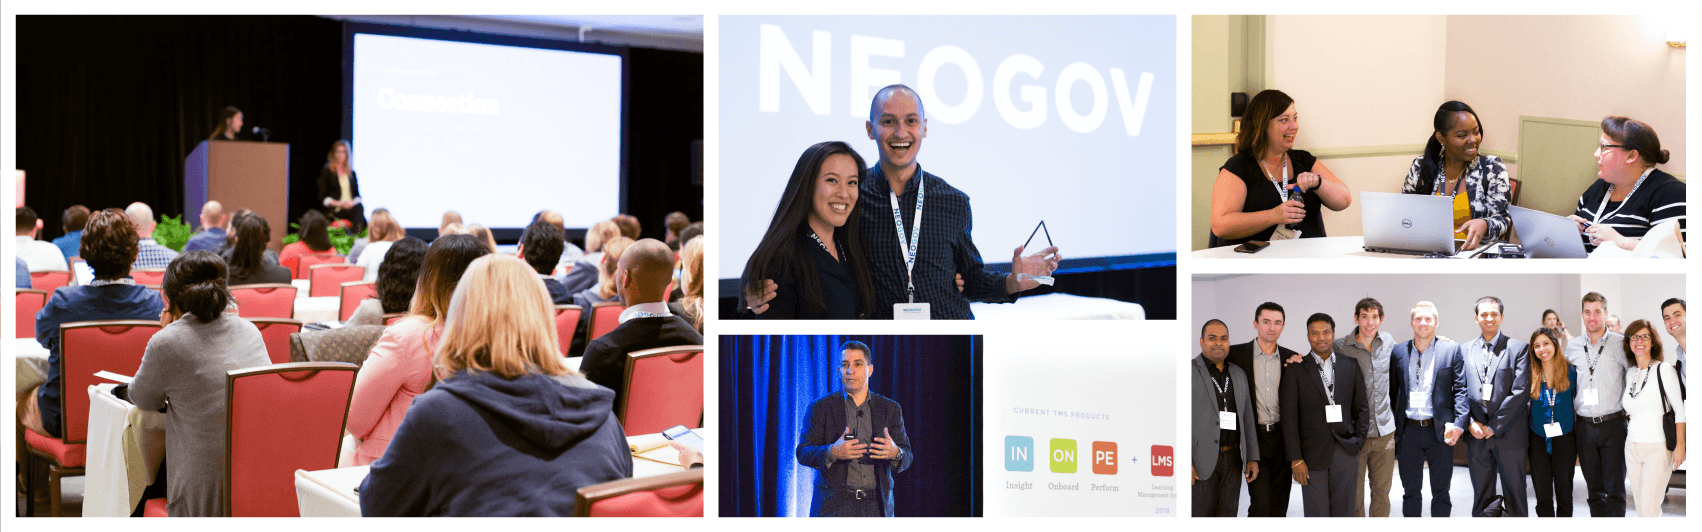 NEOGOV’s 16th Annual User Conference Draws Record Turnout